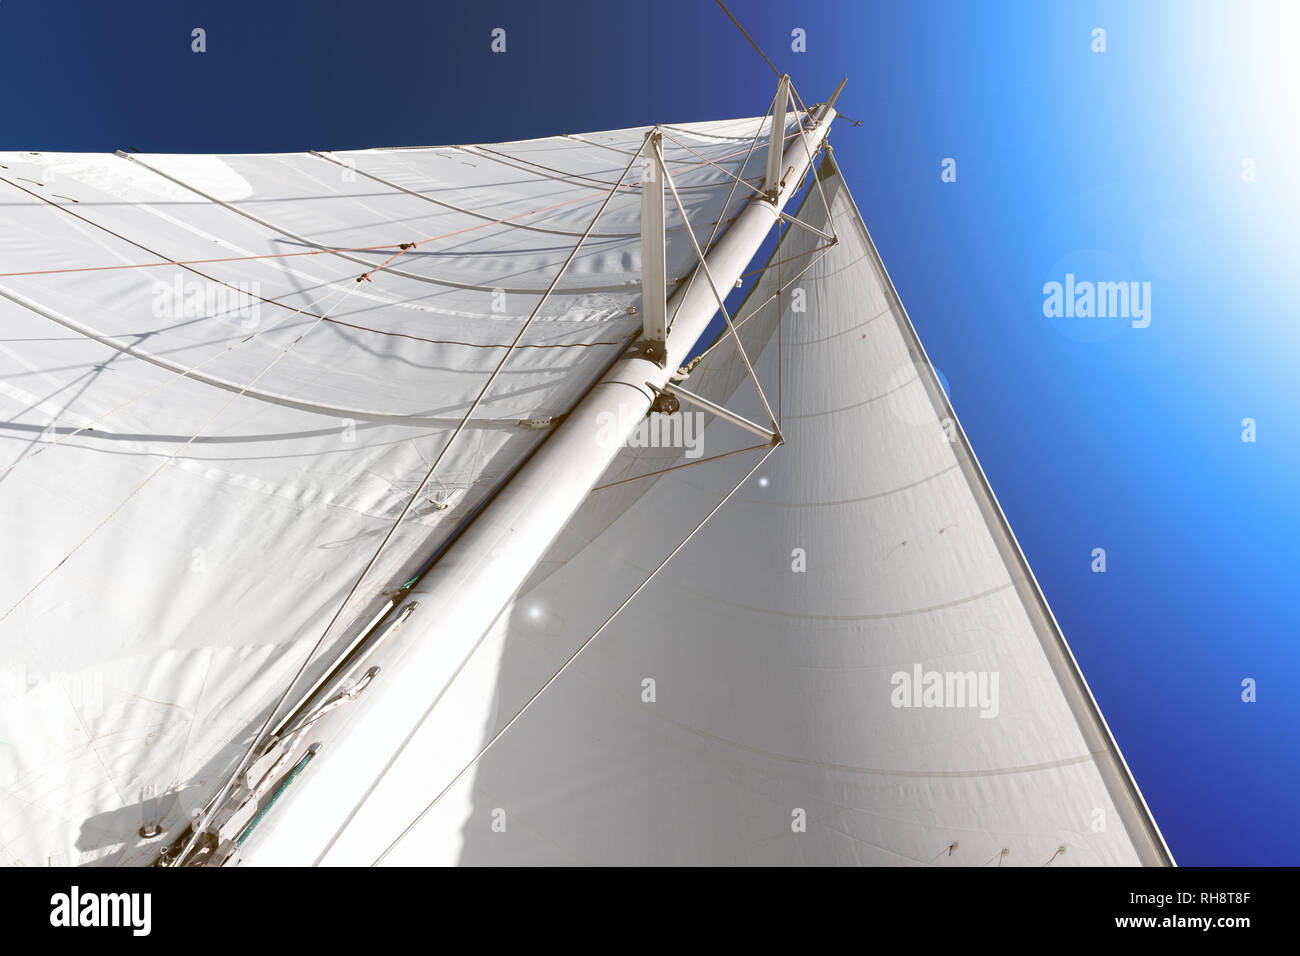 Grand-voile à bord d'un catamaran , fond bleu fannyd Banque D'Images